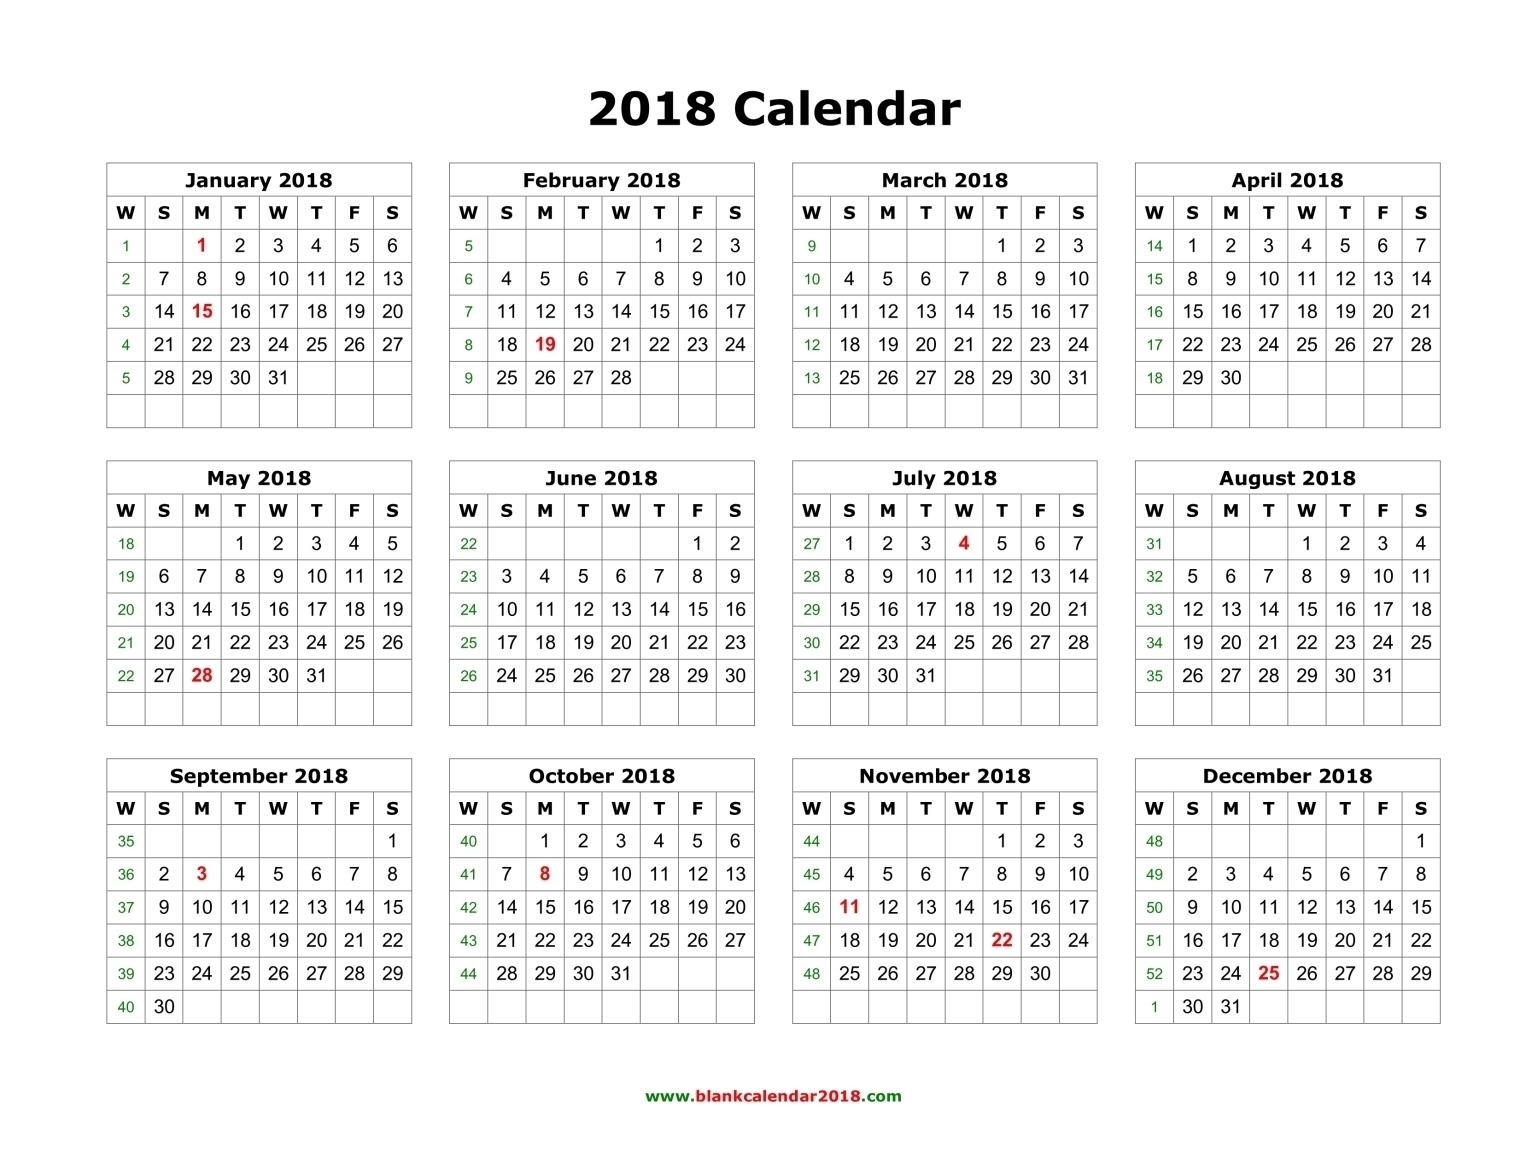 Blank Calendar 2018 Calendar Month View Printable